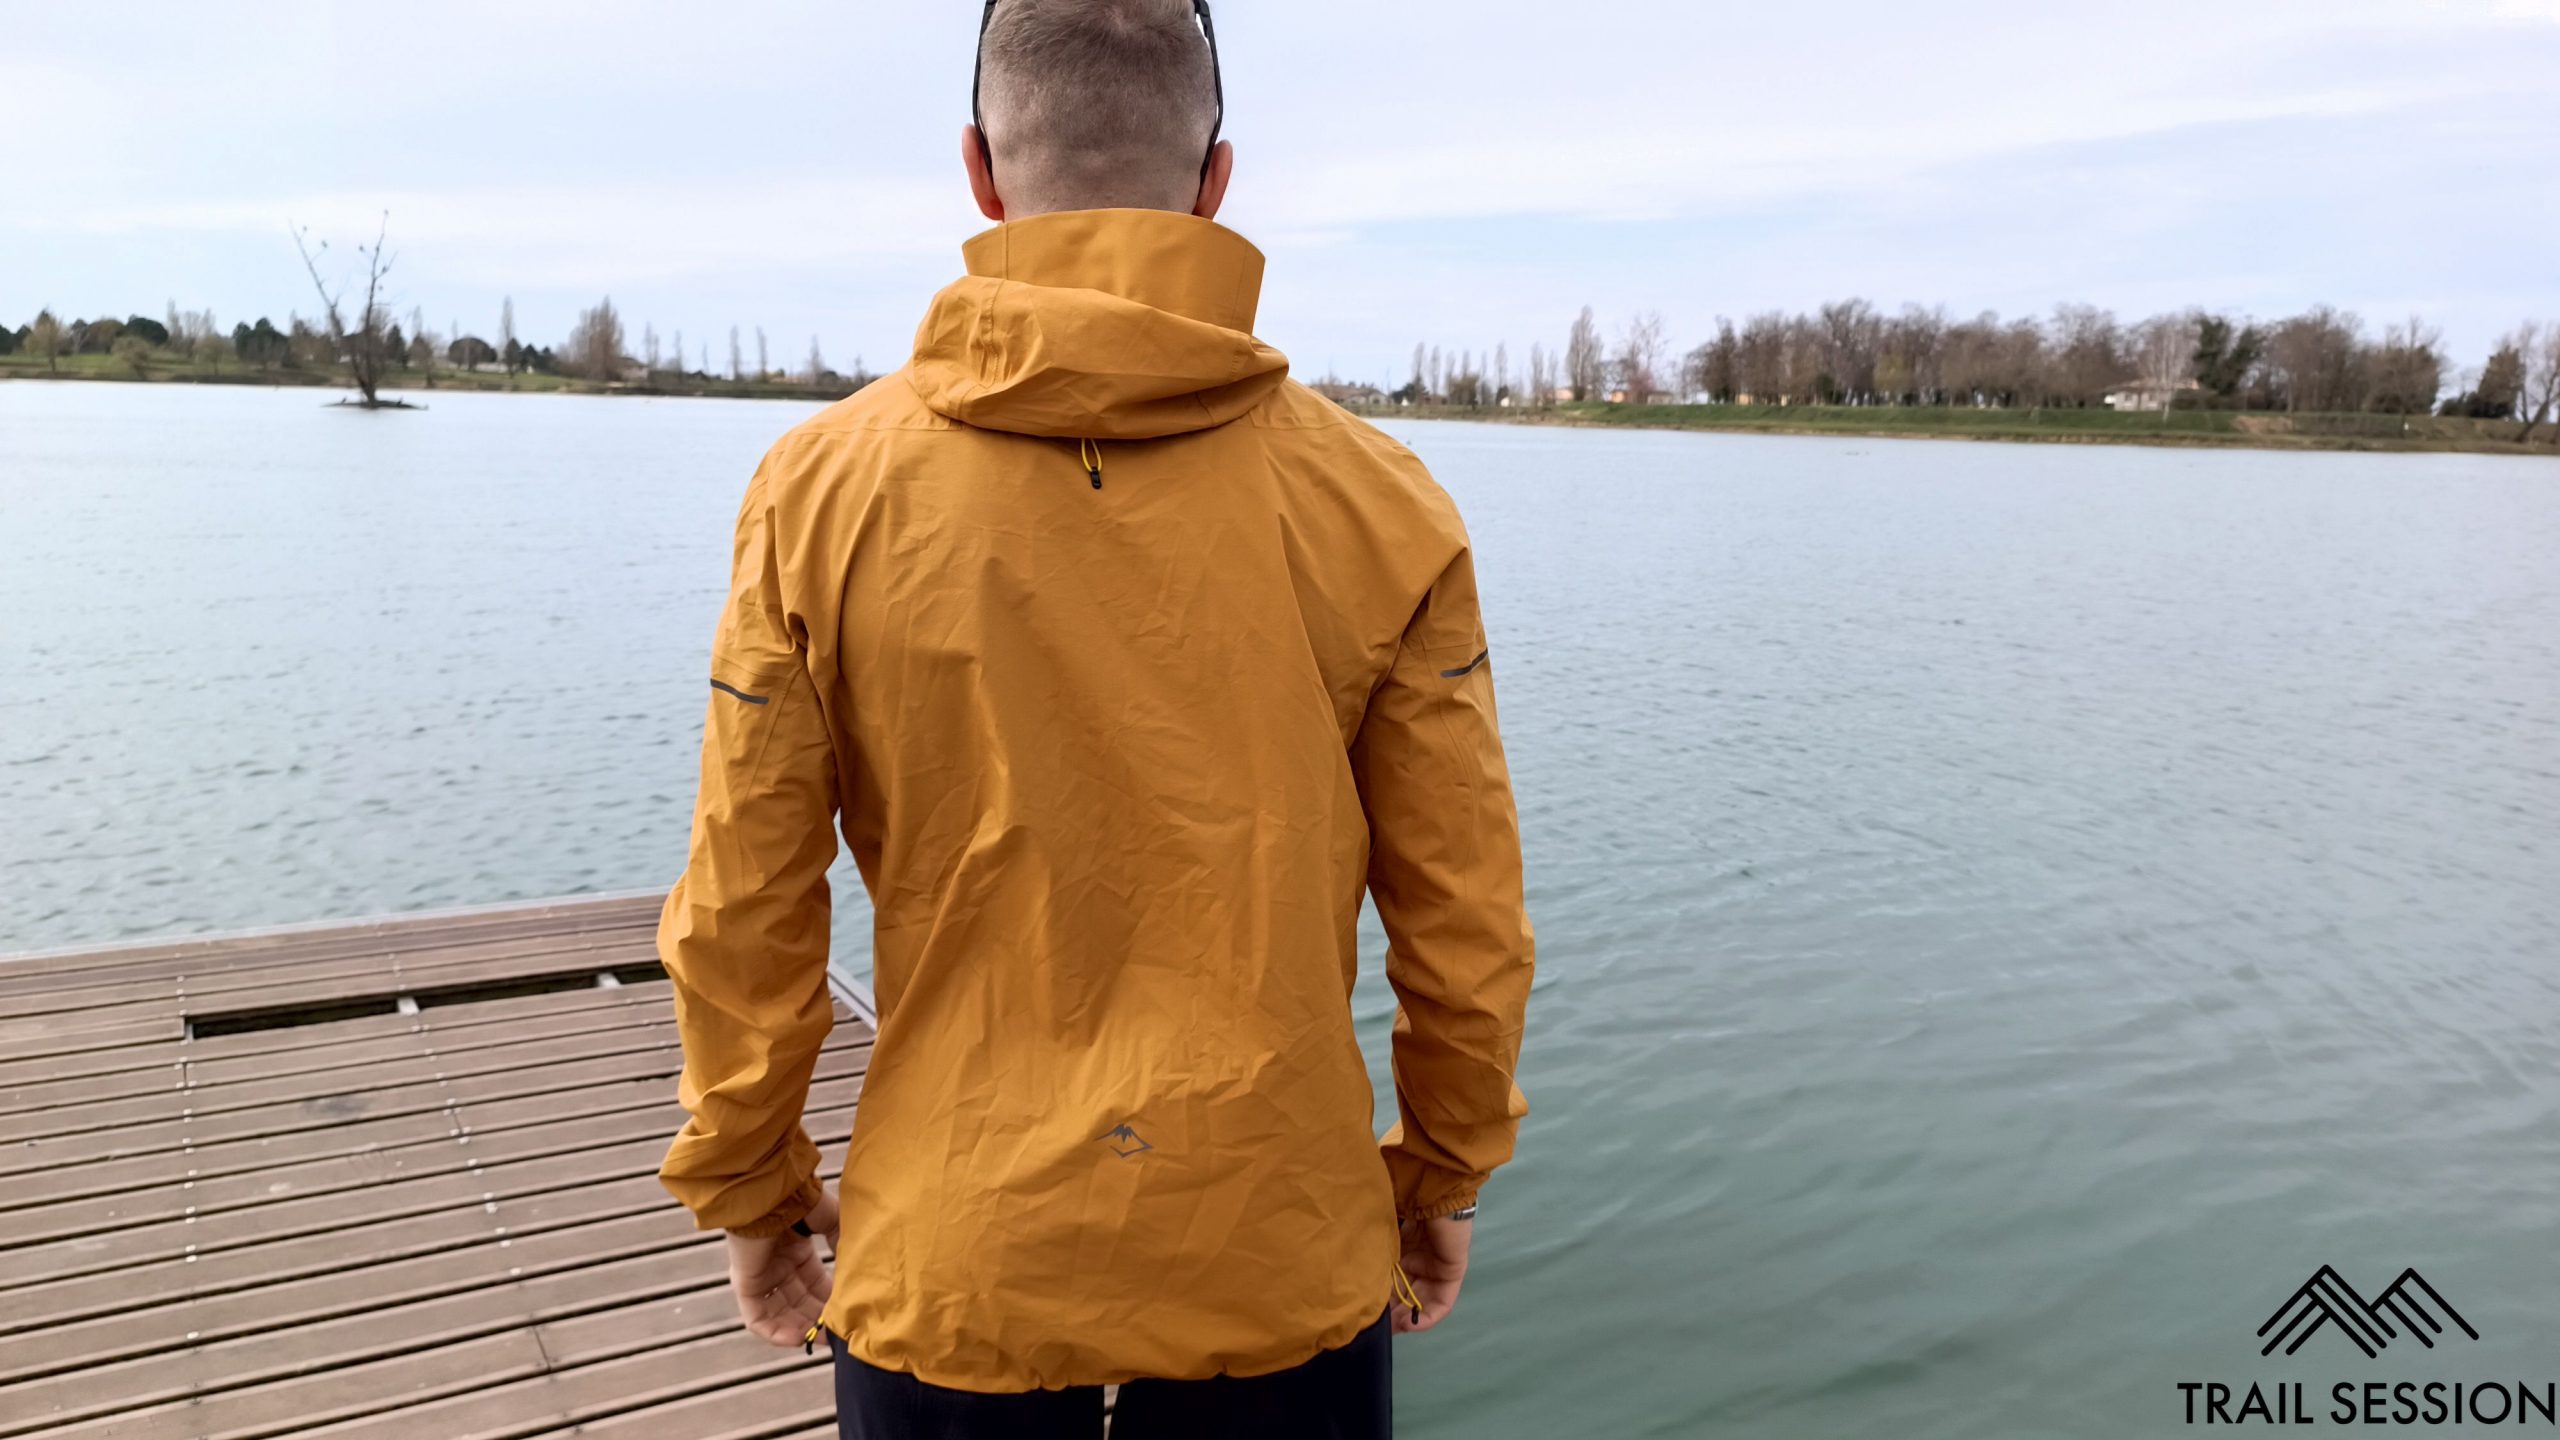 Veste légère running Woven Jacket Asics orange pour femme promo  trekking/camping